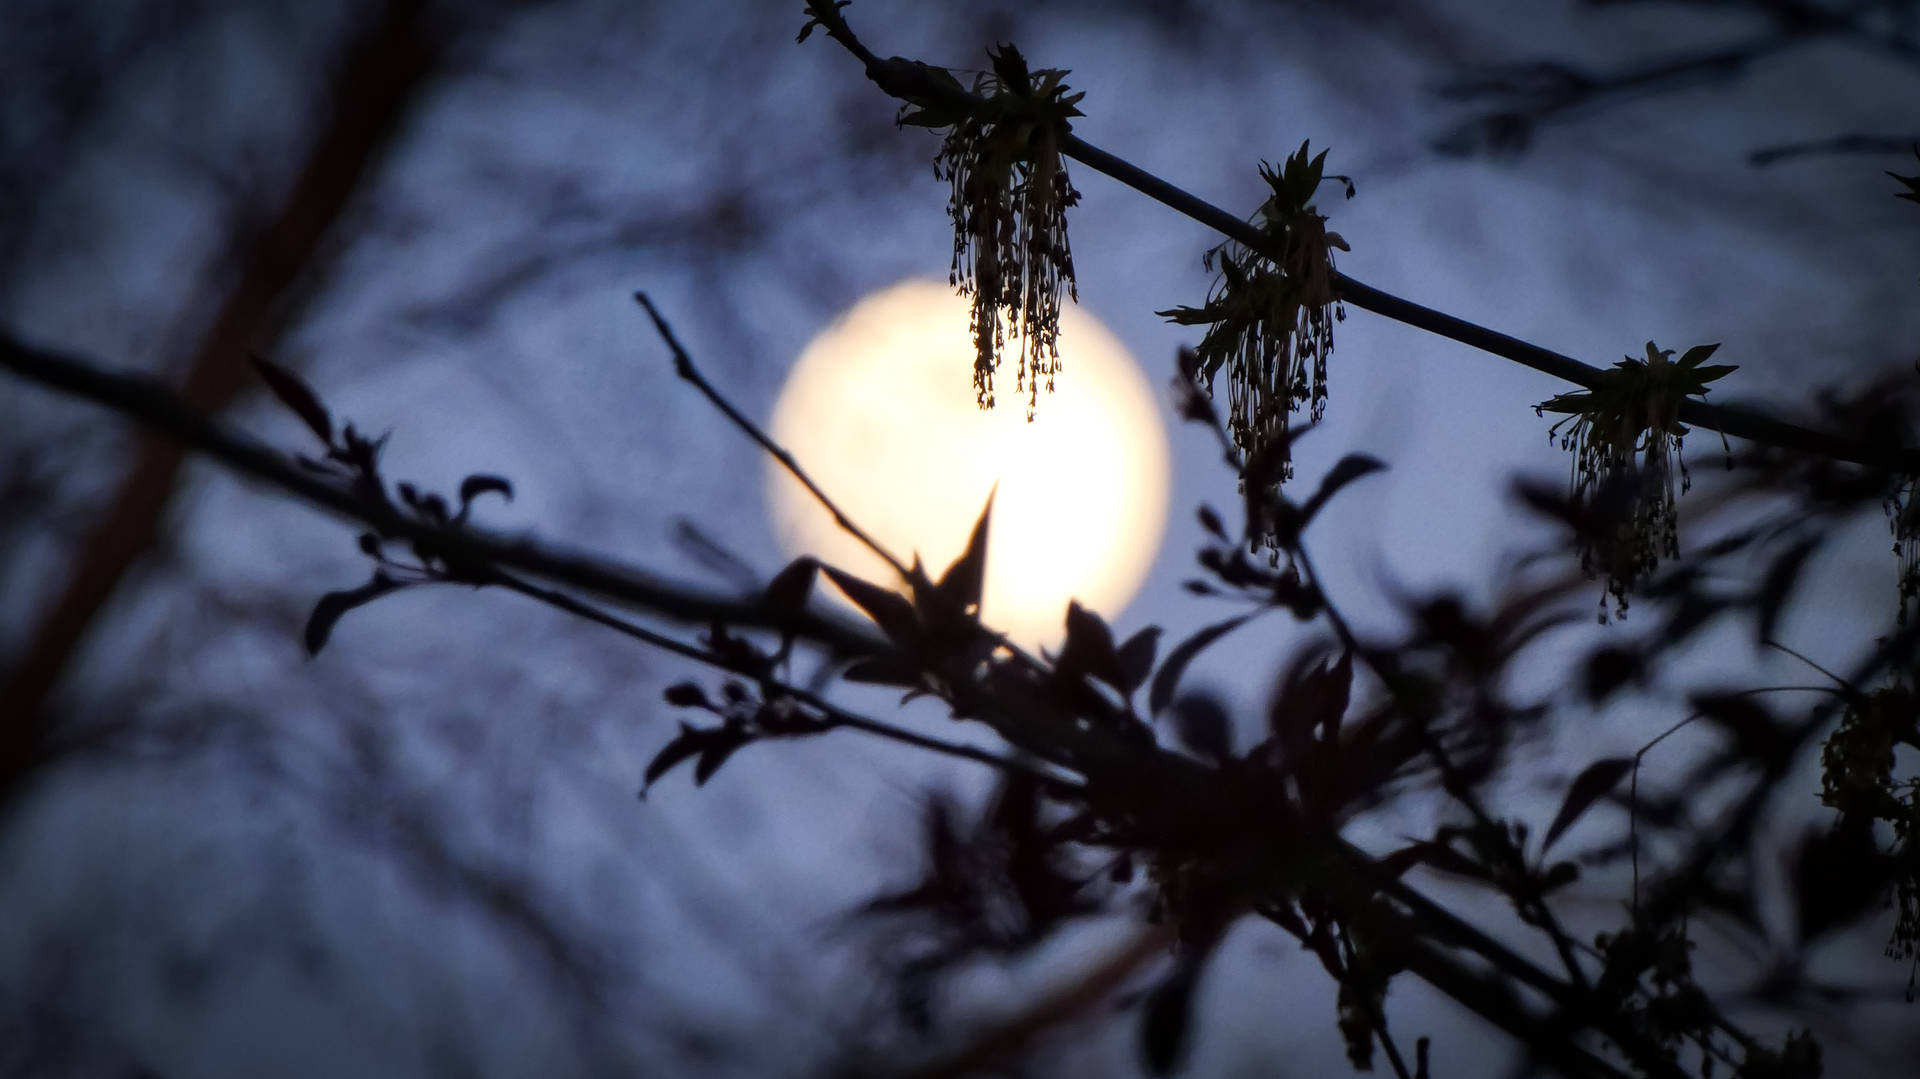 Aesthetic Moon Glowing In The Night